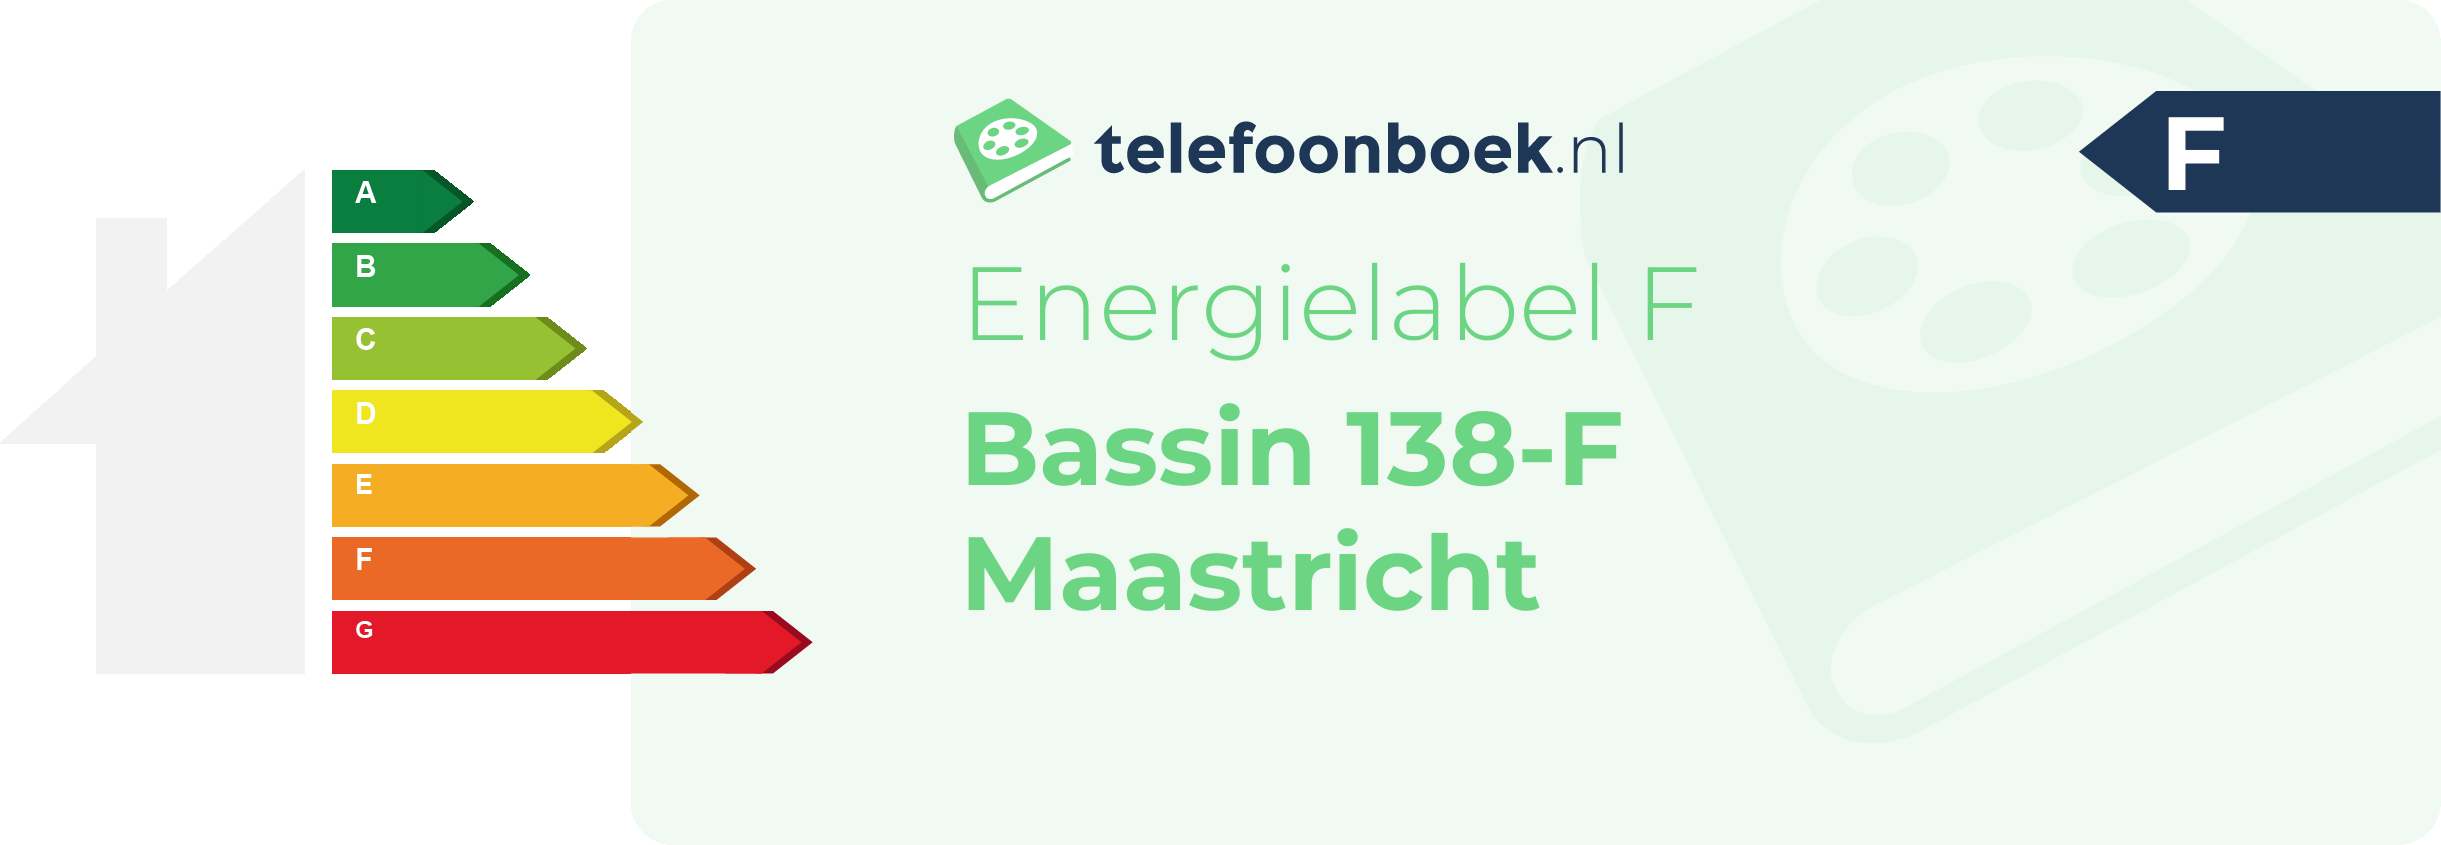 Energielabel Bassin 138-F Maastricht